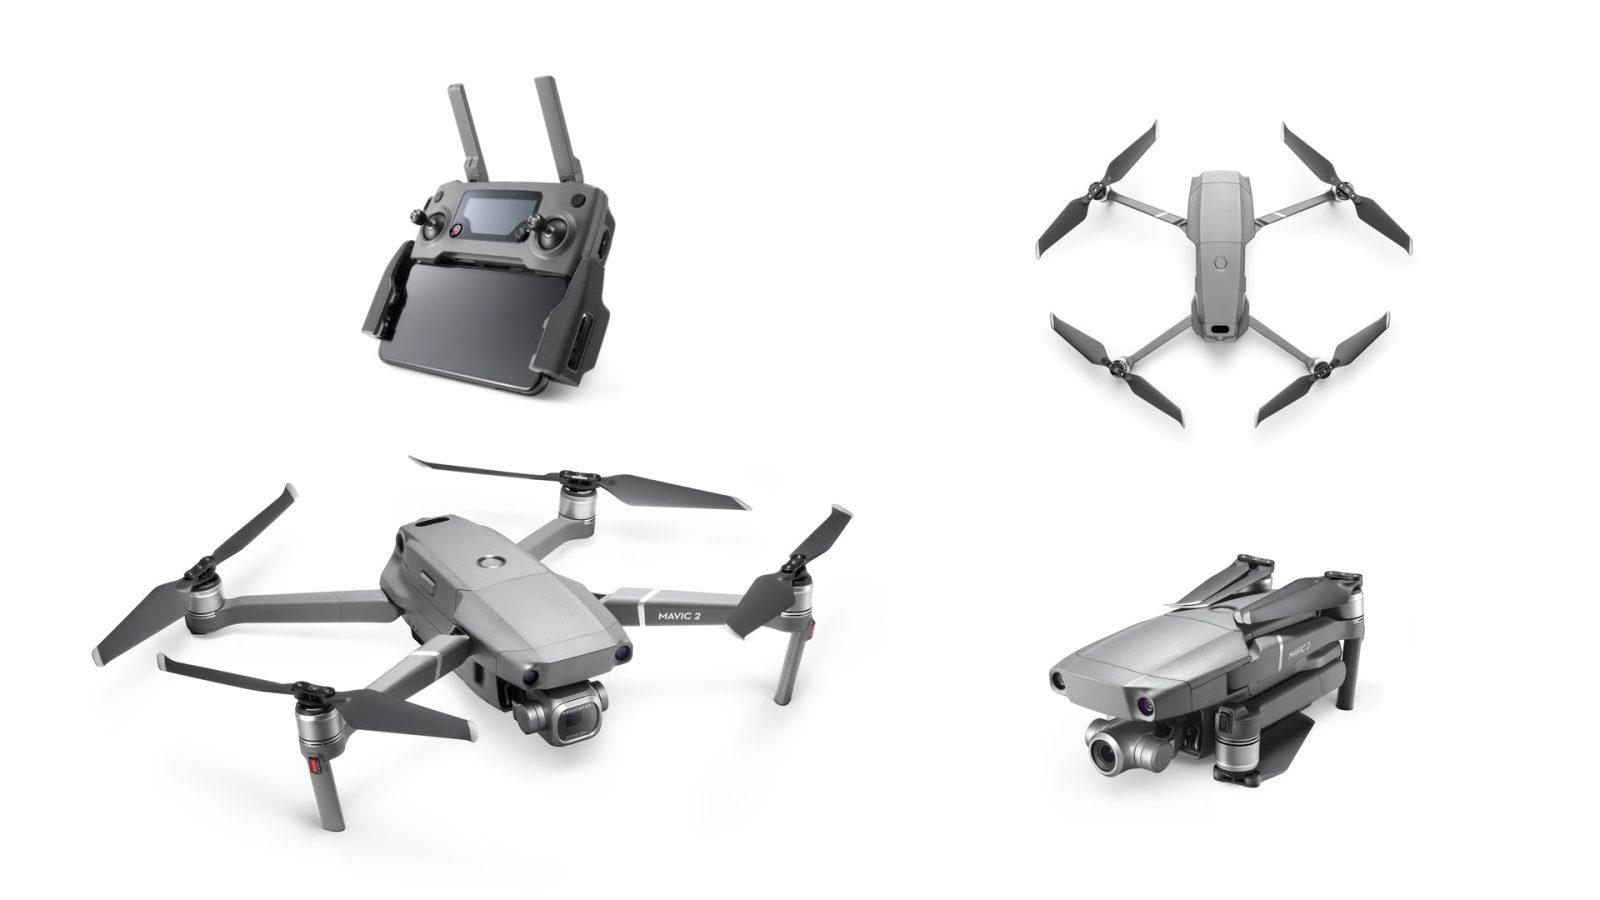 DJI Mavic 2 Zoom Pro Drones Unveiled: Hasselblad Cam 2x Optical